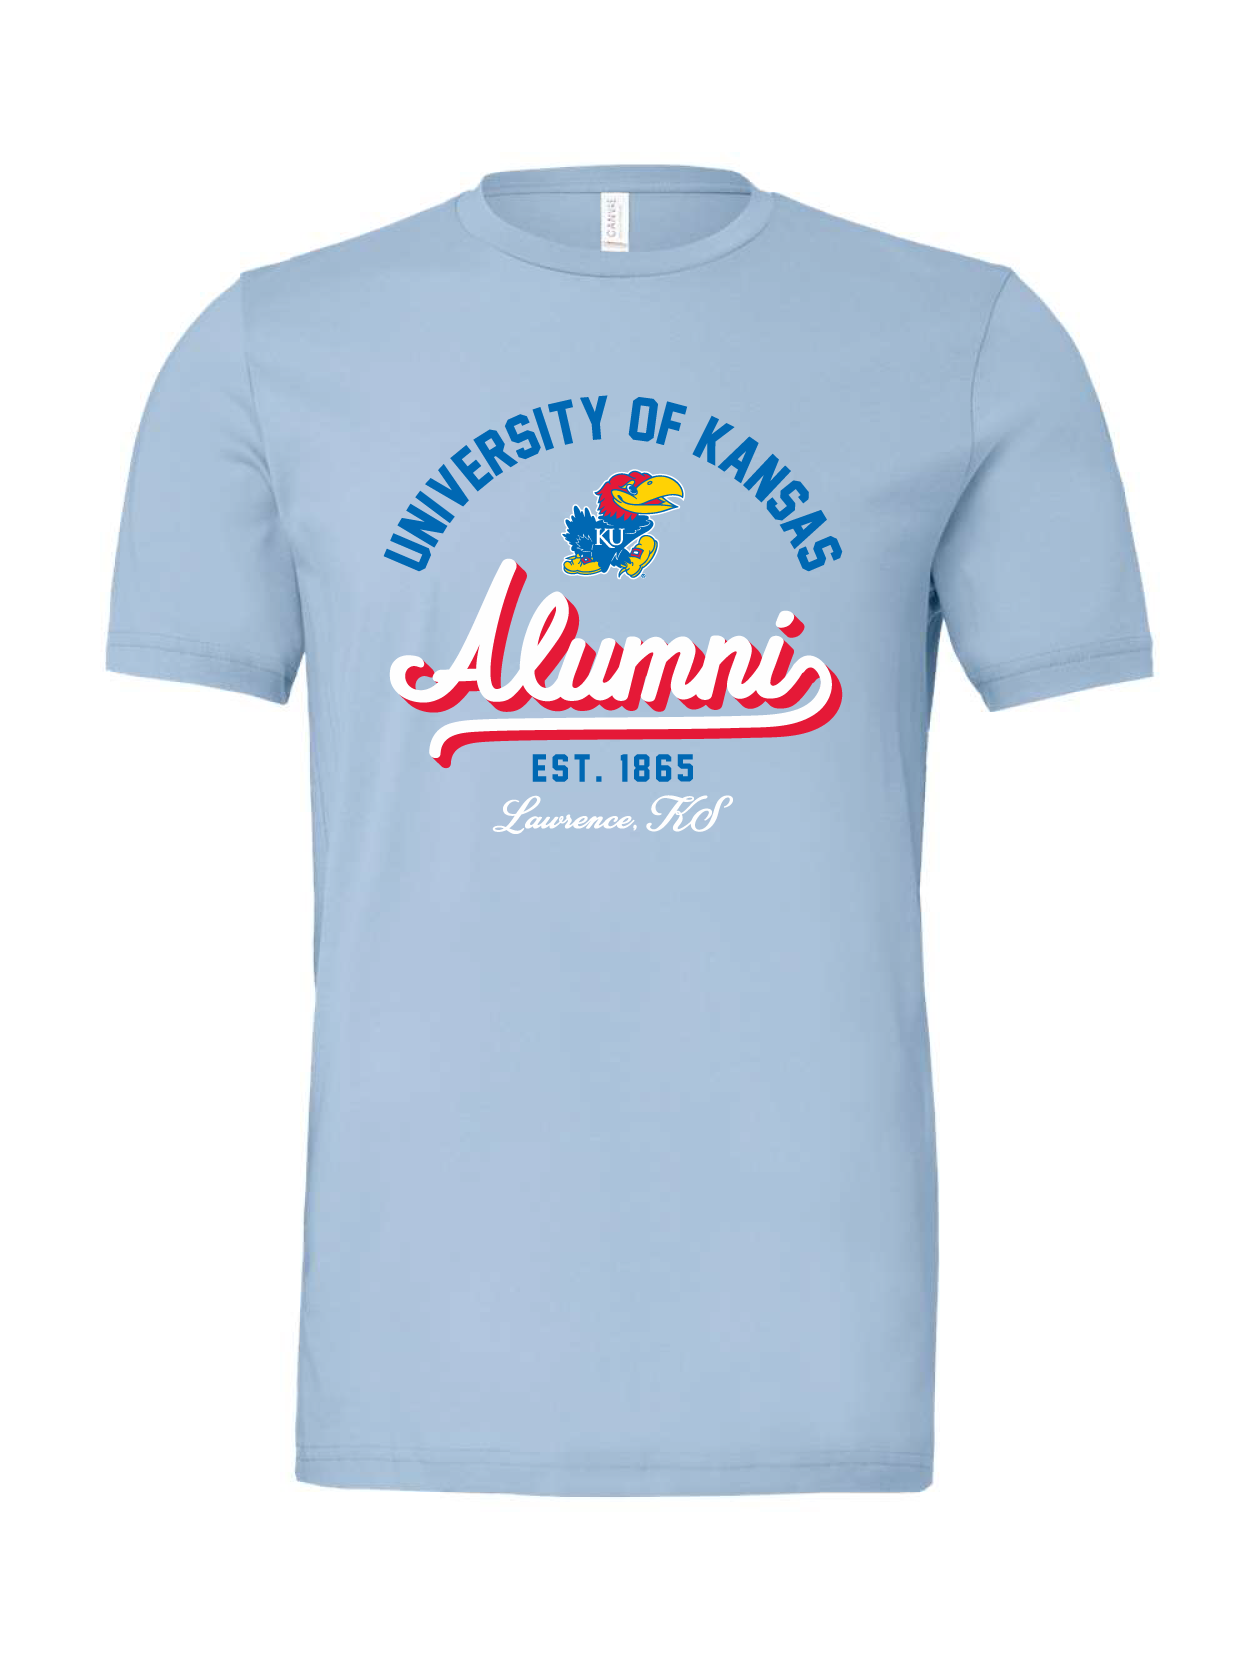 University of Kansas Alumni est. 1865